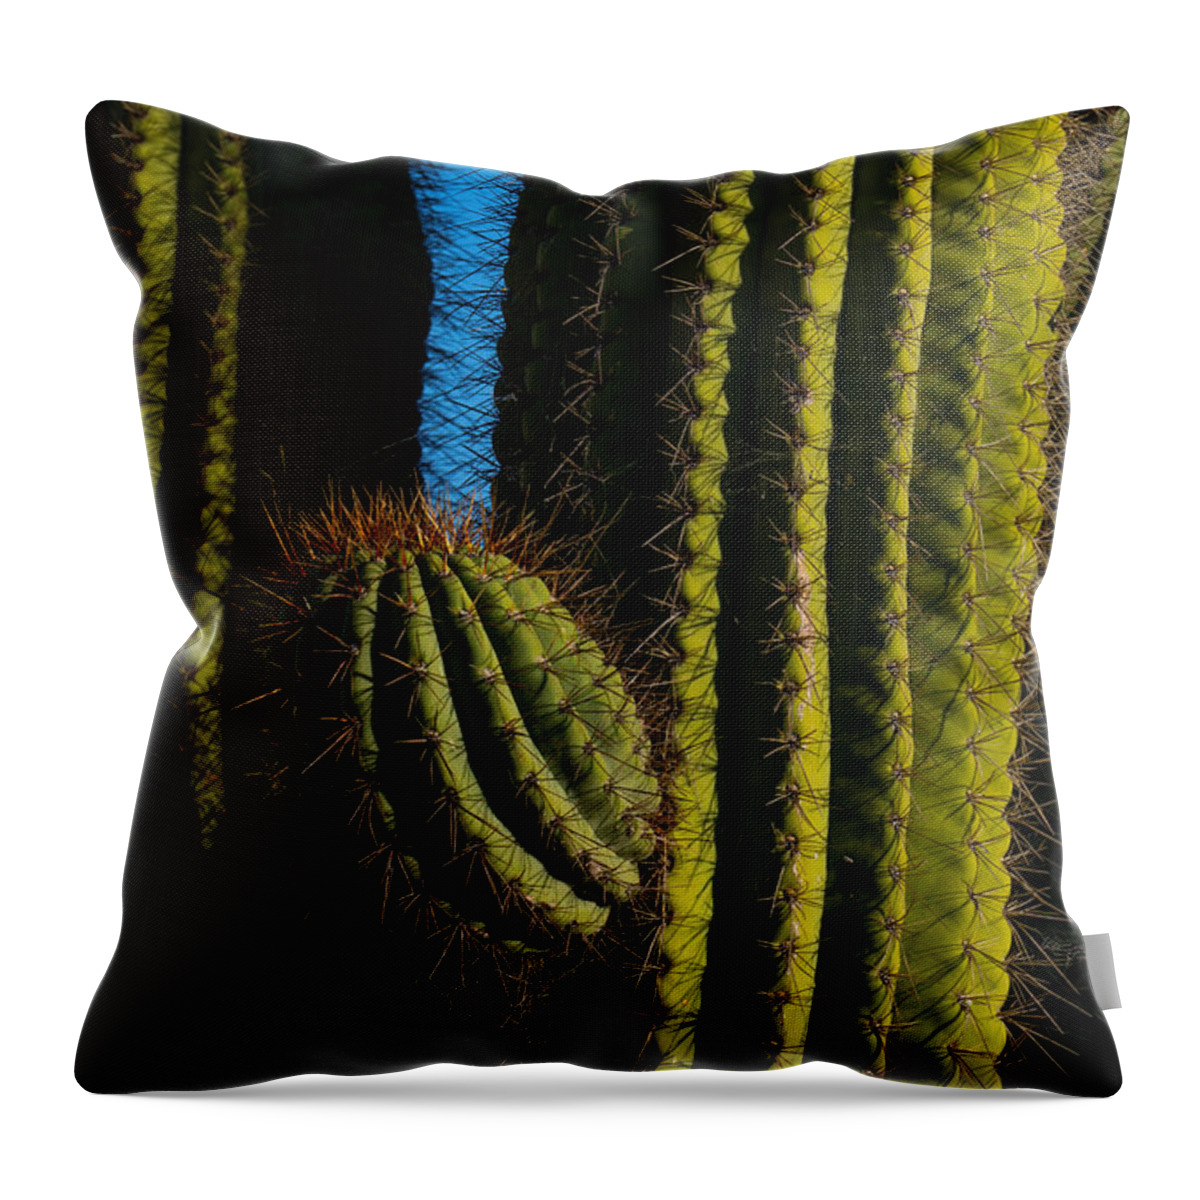 Cacti Throw Pillow featuring the photograph Cacti by Derek Dean